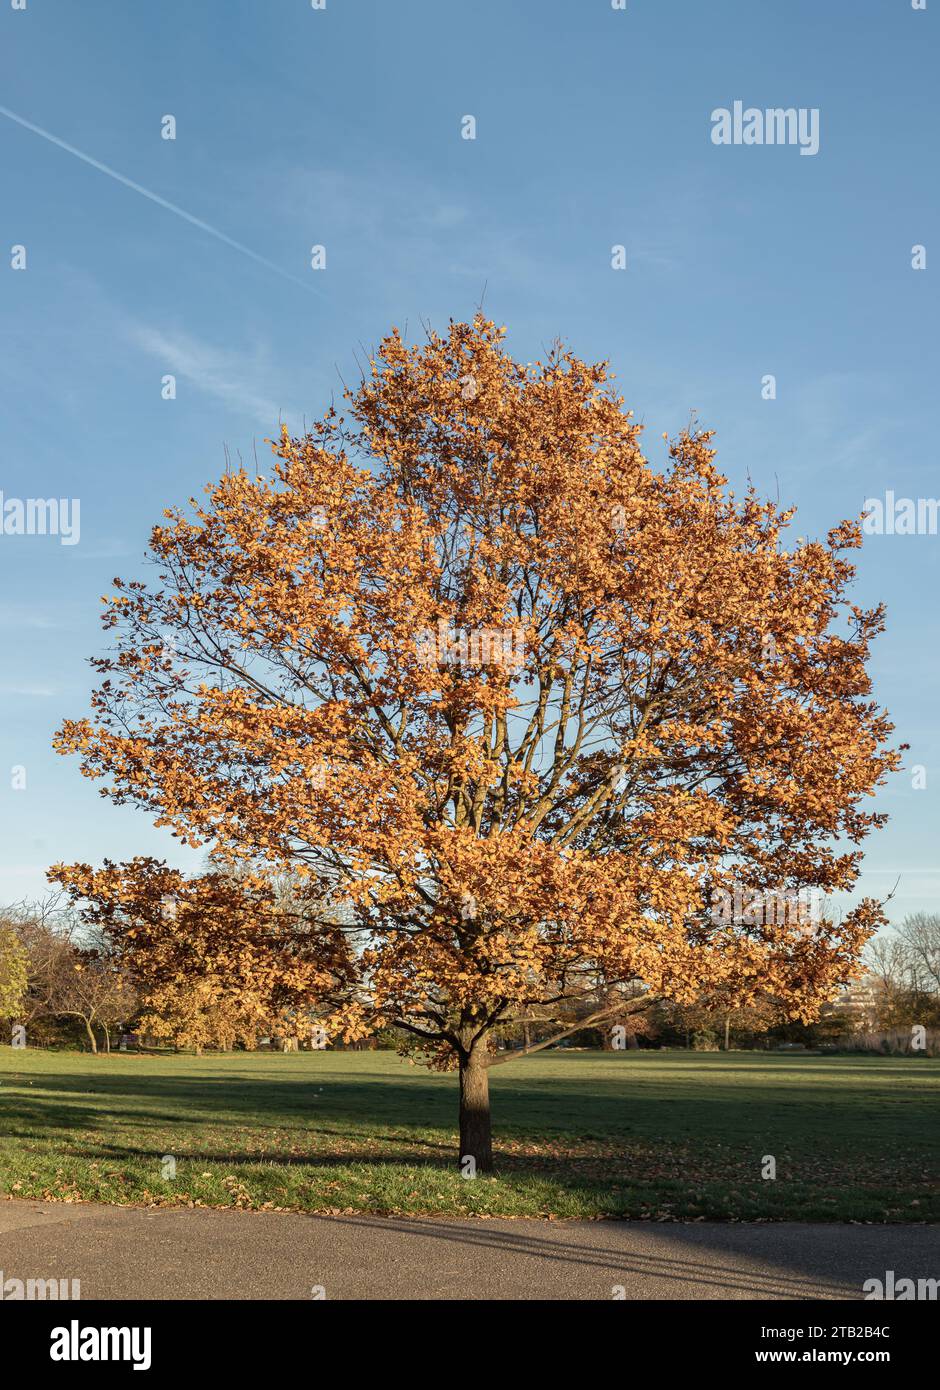 Fall sugar maple tree (Acer saccharum) or (Liquidambar formosana hance), The sugar maple or rock maple in full autumn colors, Formosan sweet gum, Frag Stock Photo